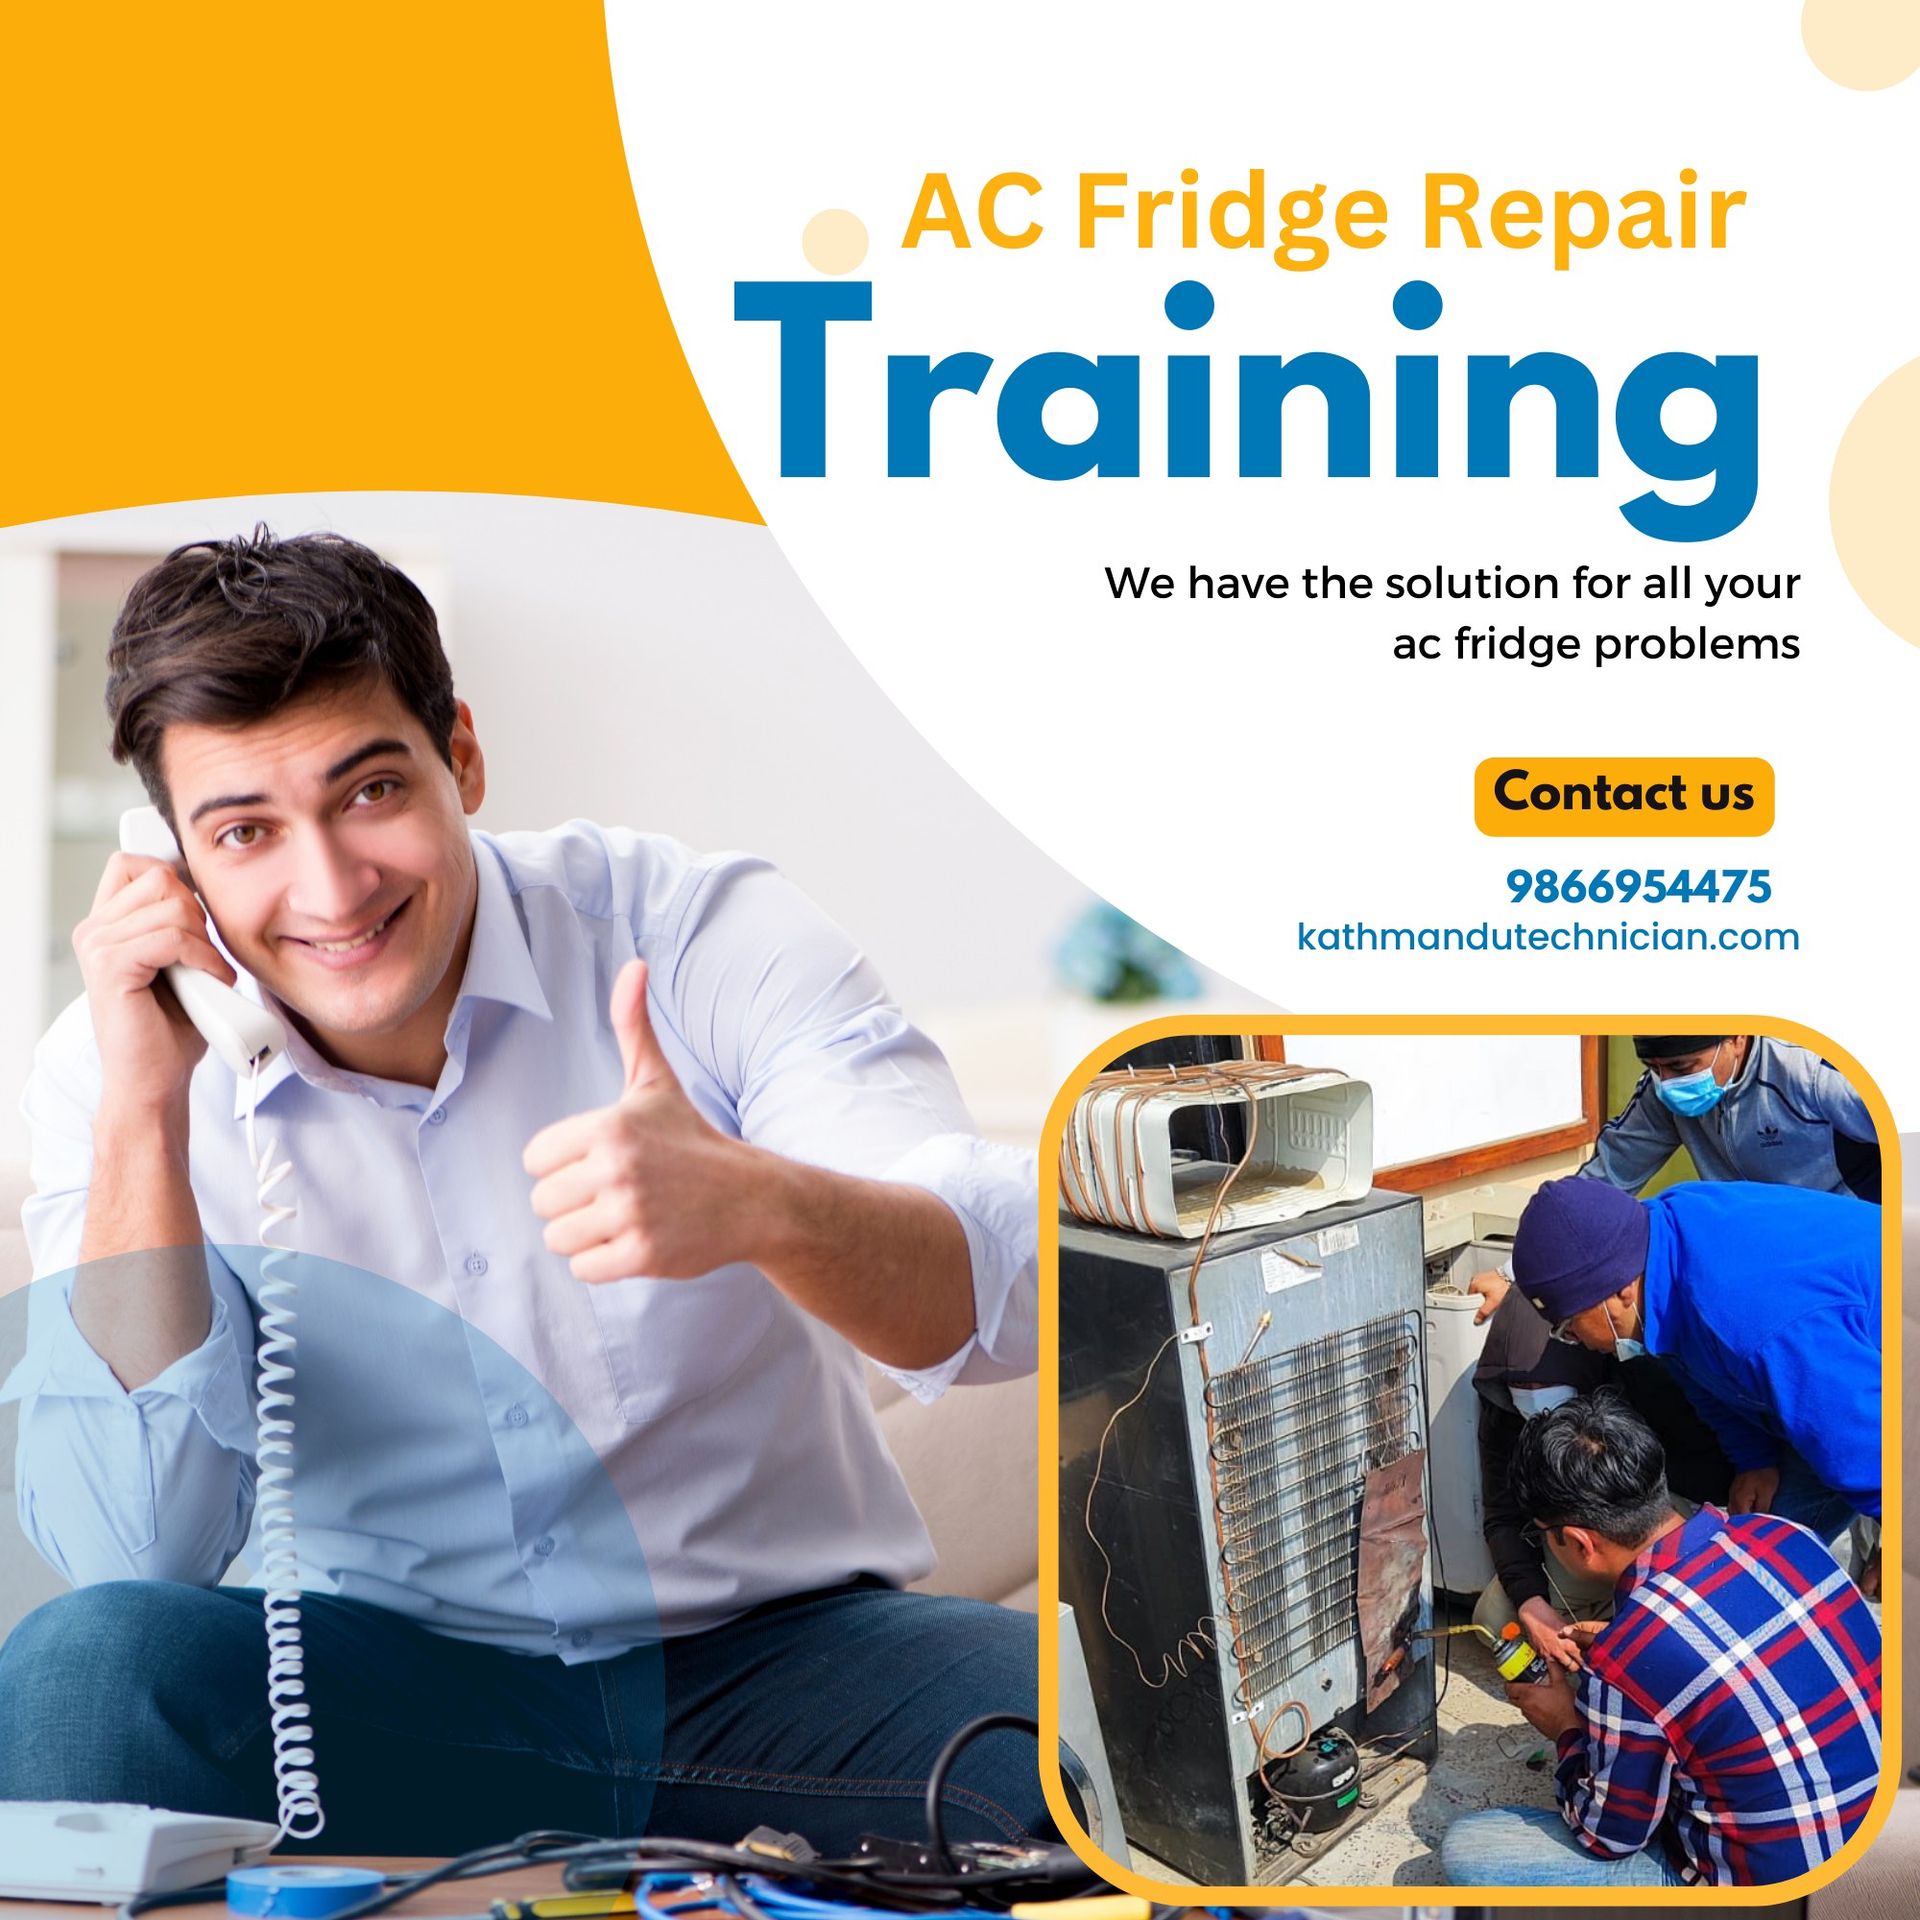 ac and fridge repair training in Kathmandu